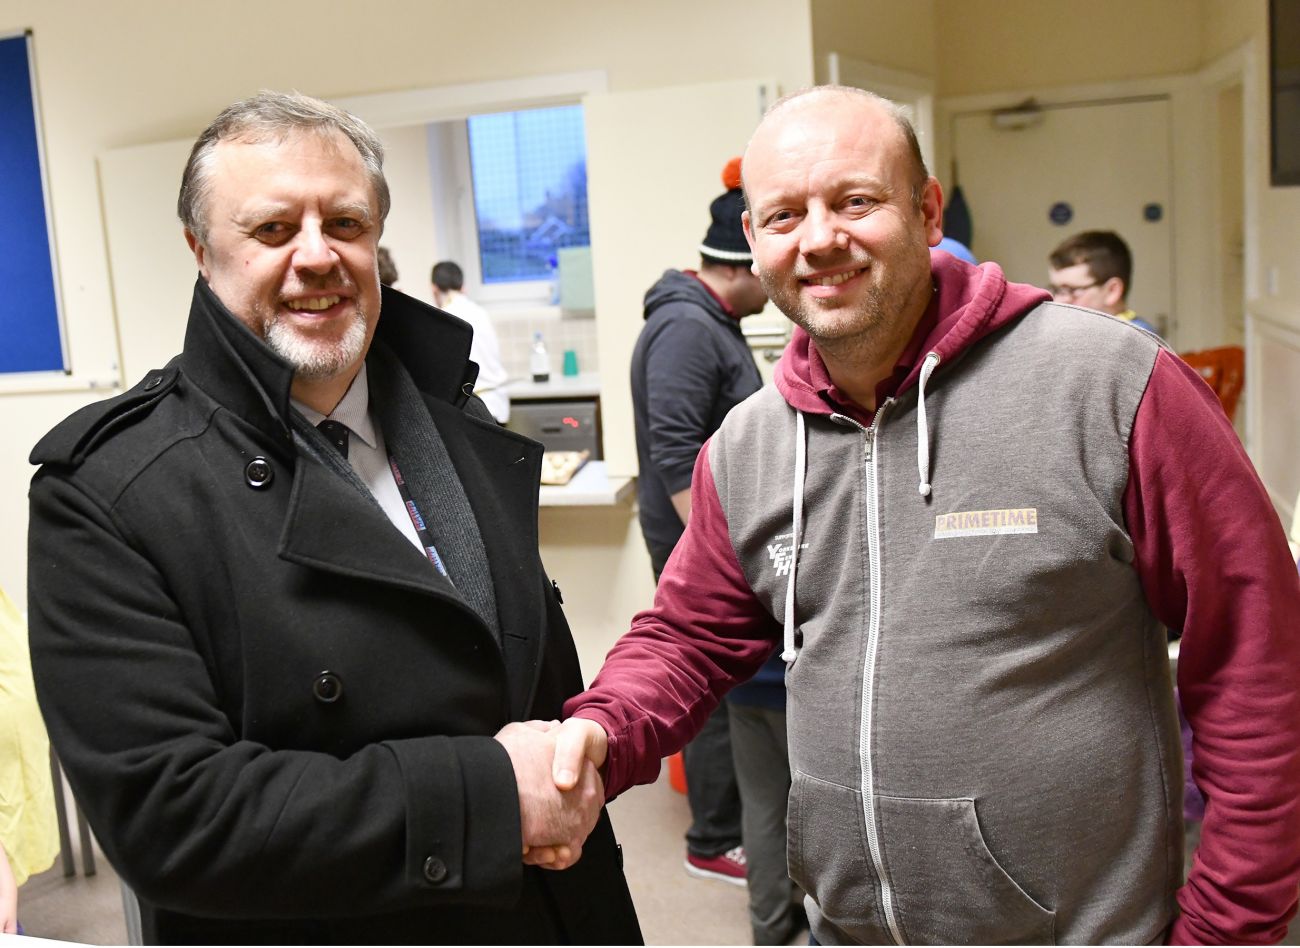 Image of PCC Mark Burns-Williamson with John Myers, Primetime Bradford Project Manager